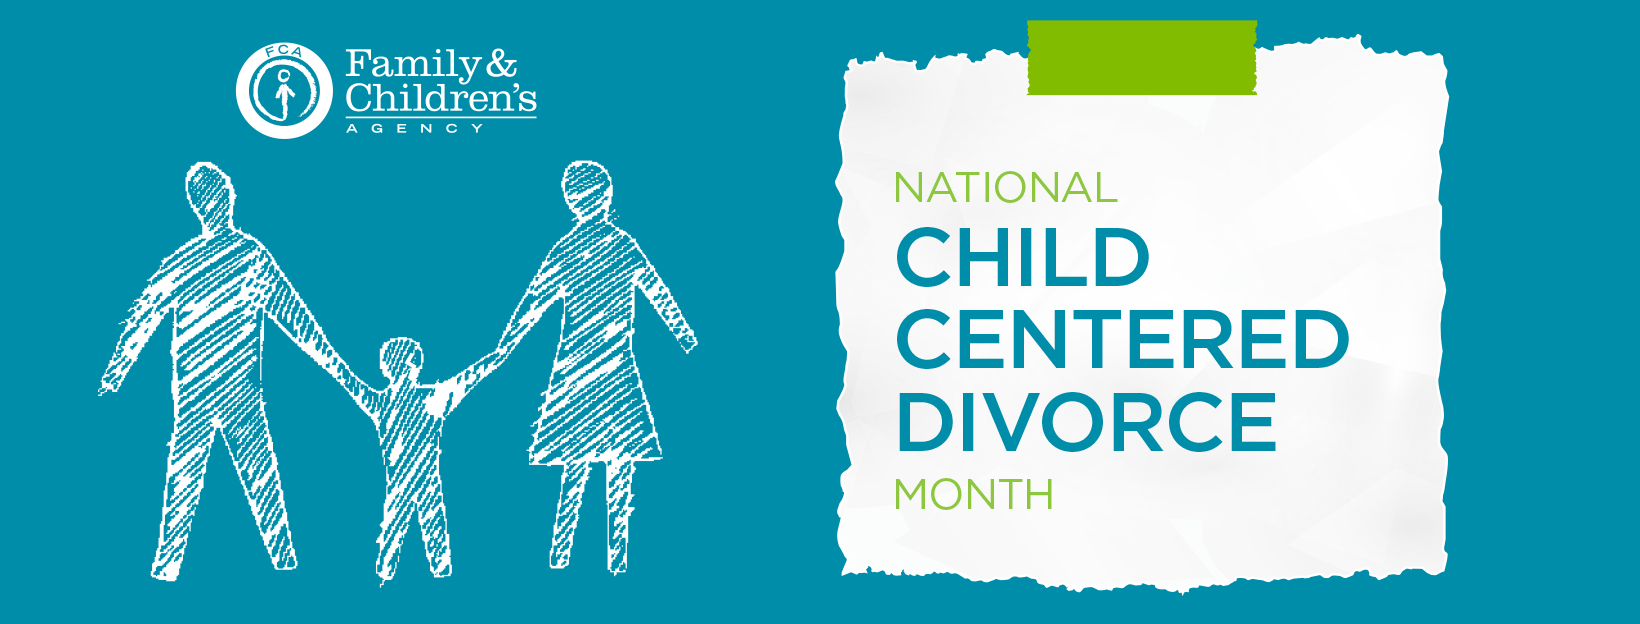 July is Child Centered Divorce Month